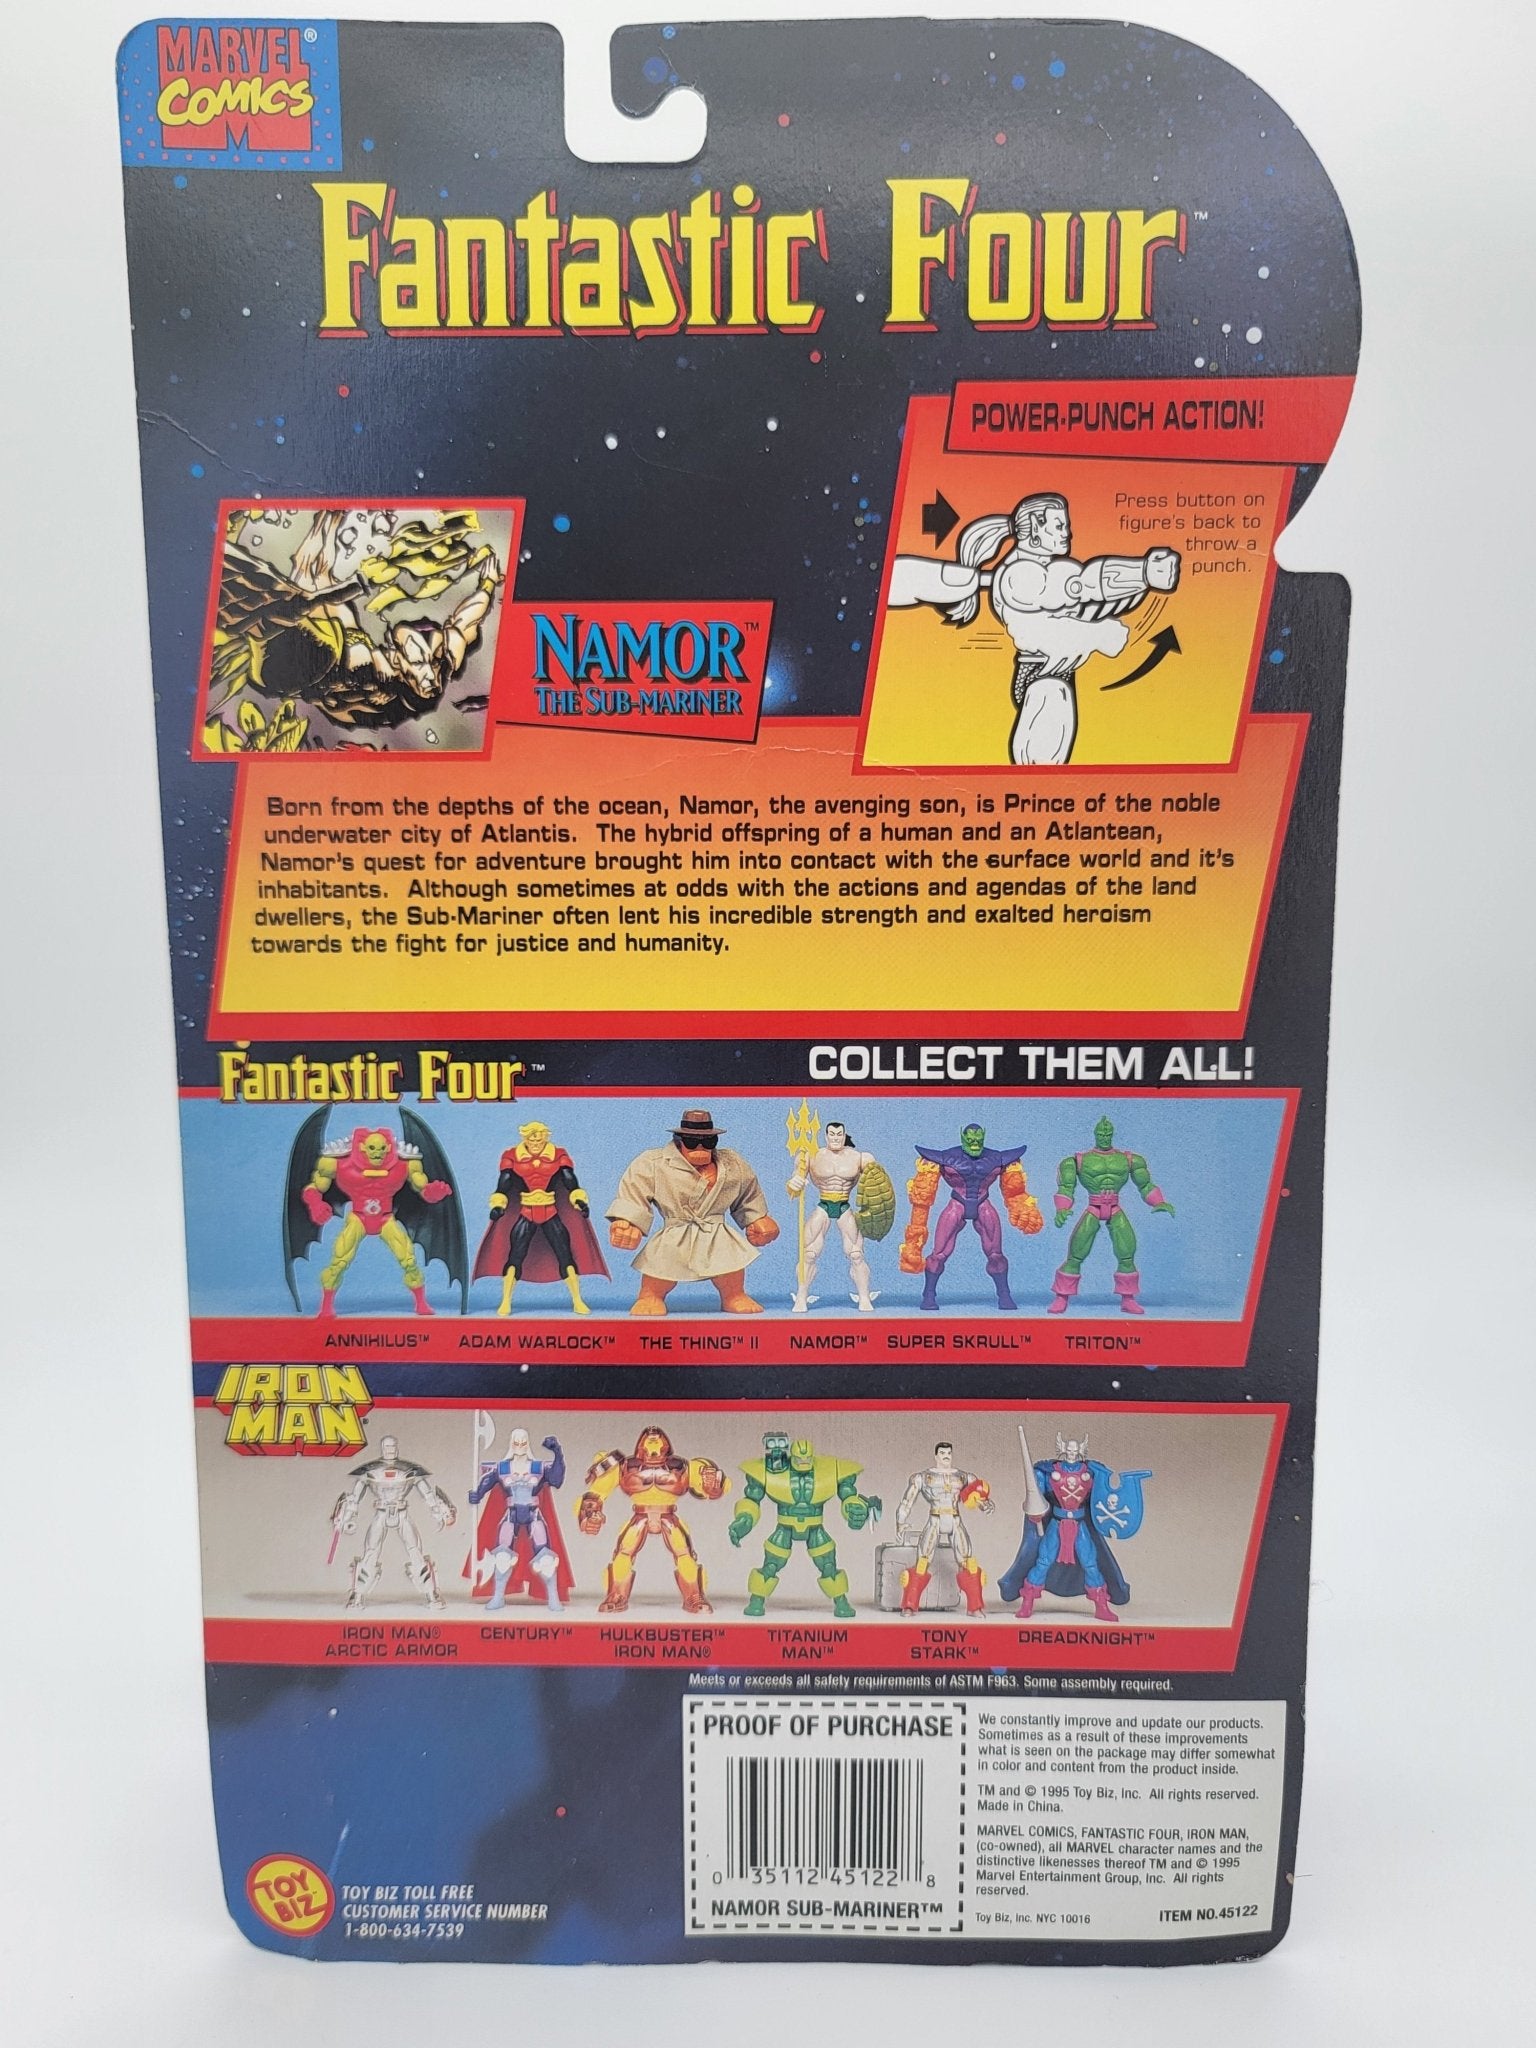 Toy Biz - Toy Biz | Fantastic Four Namor -1995 | Vintage Marvel Action Figure - Action Figures - Steady Bunny Shop